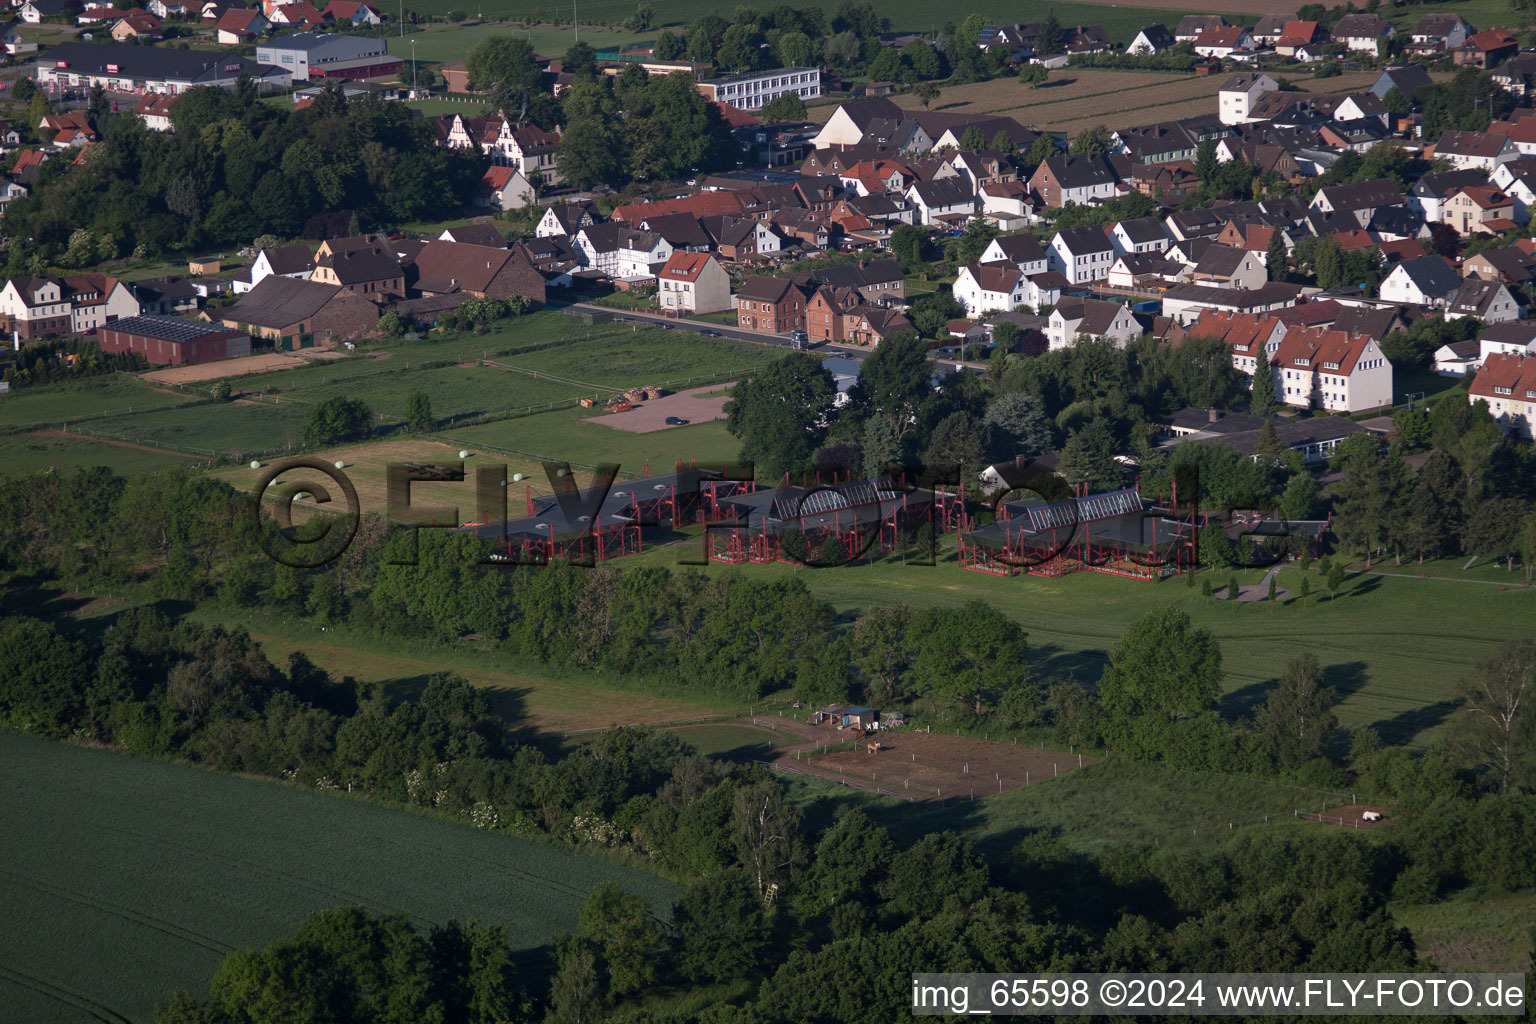 Aerial view of Beverungen in the state North Rhine-Westphalia, Germany